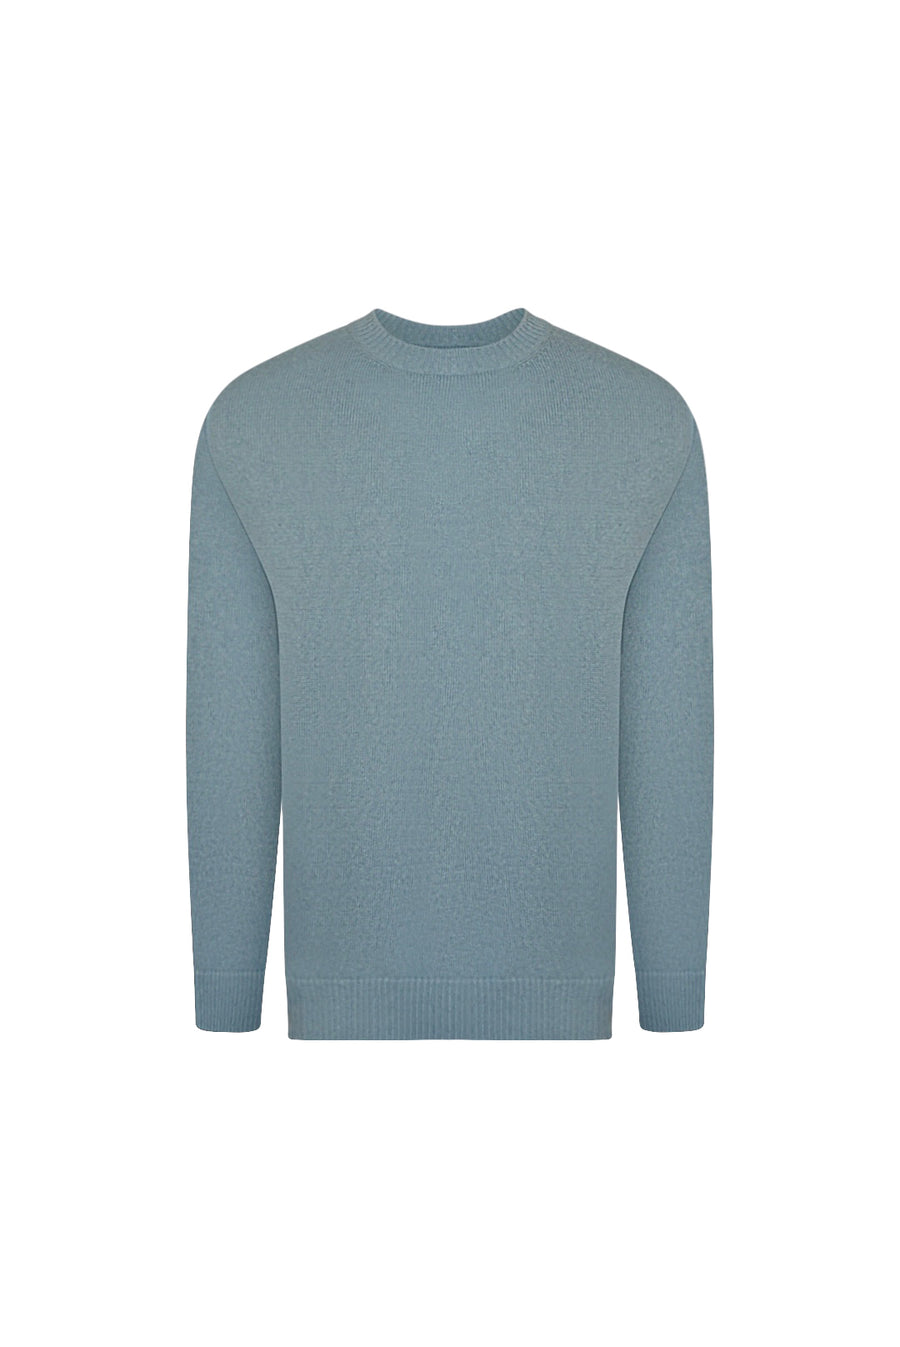 Alpaca Crew Neck Knit Sweater (Aqua Blue)